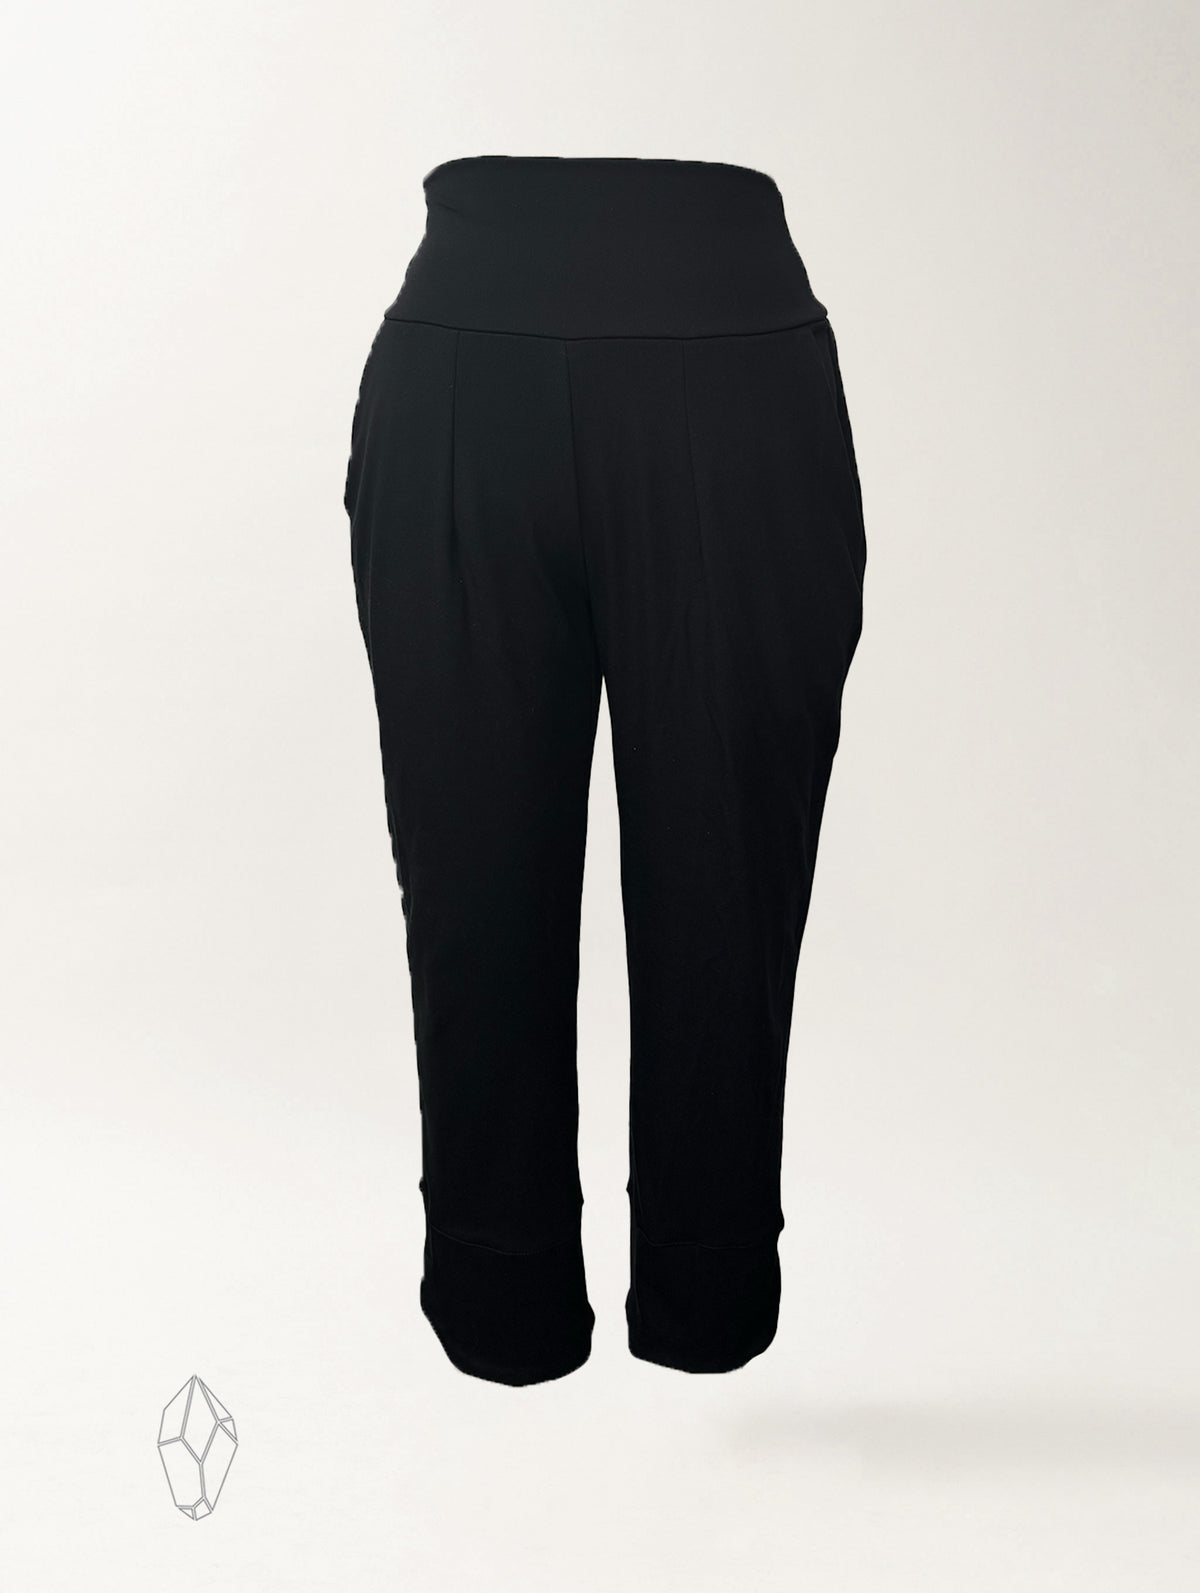 Lululemon Women Work Pants Black Ponte Knit Flat Front Size 4 VERY NICE L104